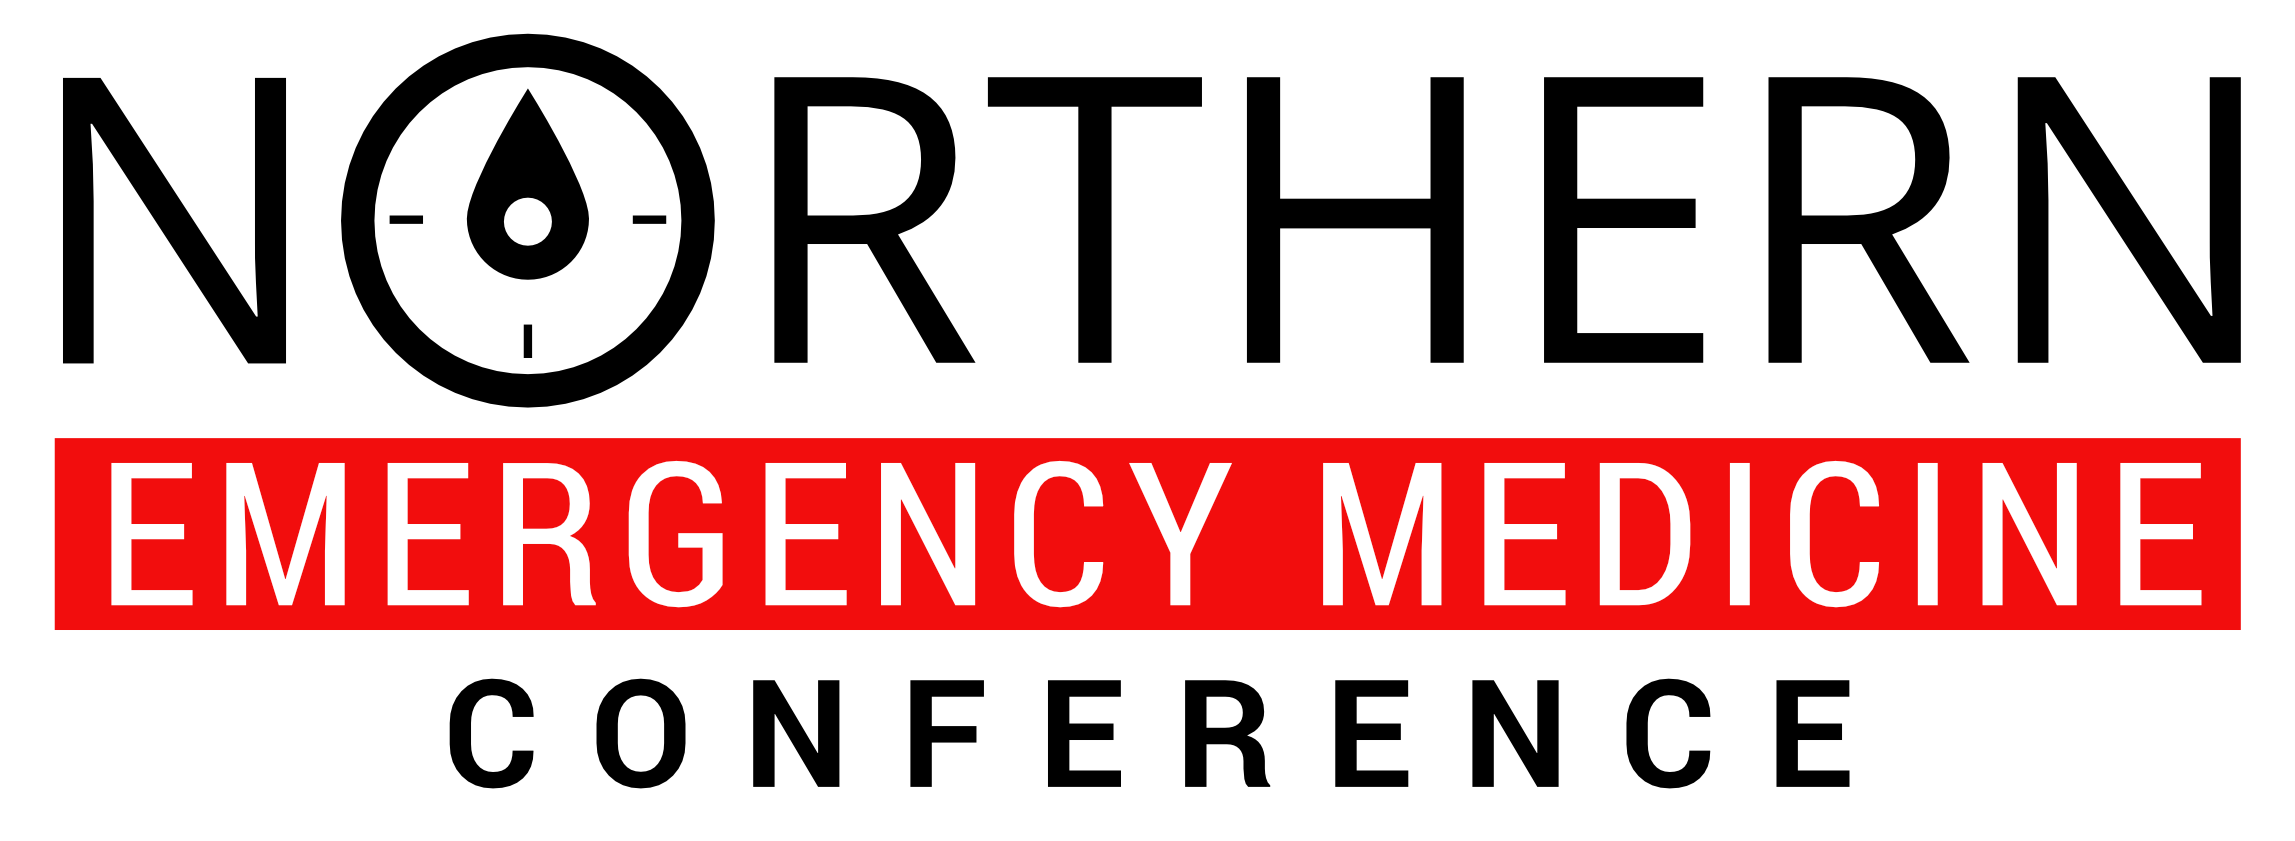 Northern Emergency Medicine Conference